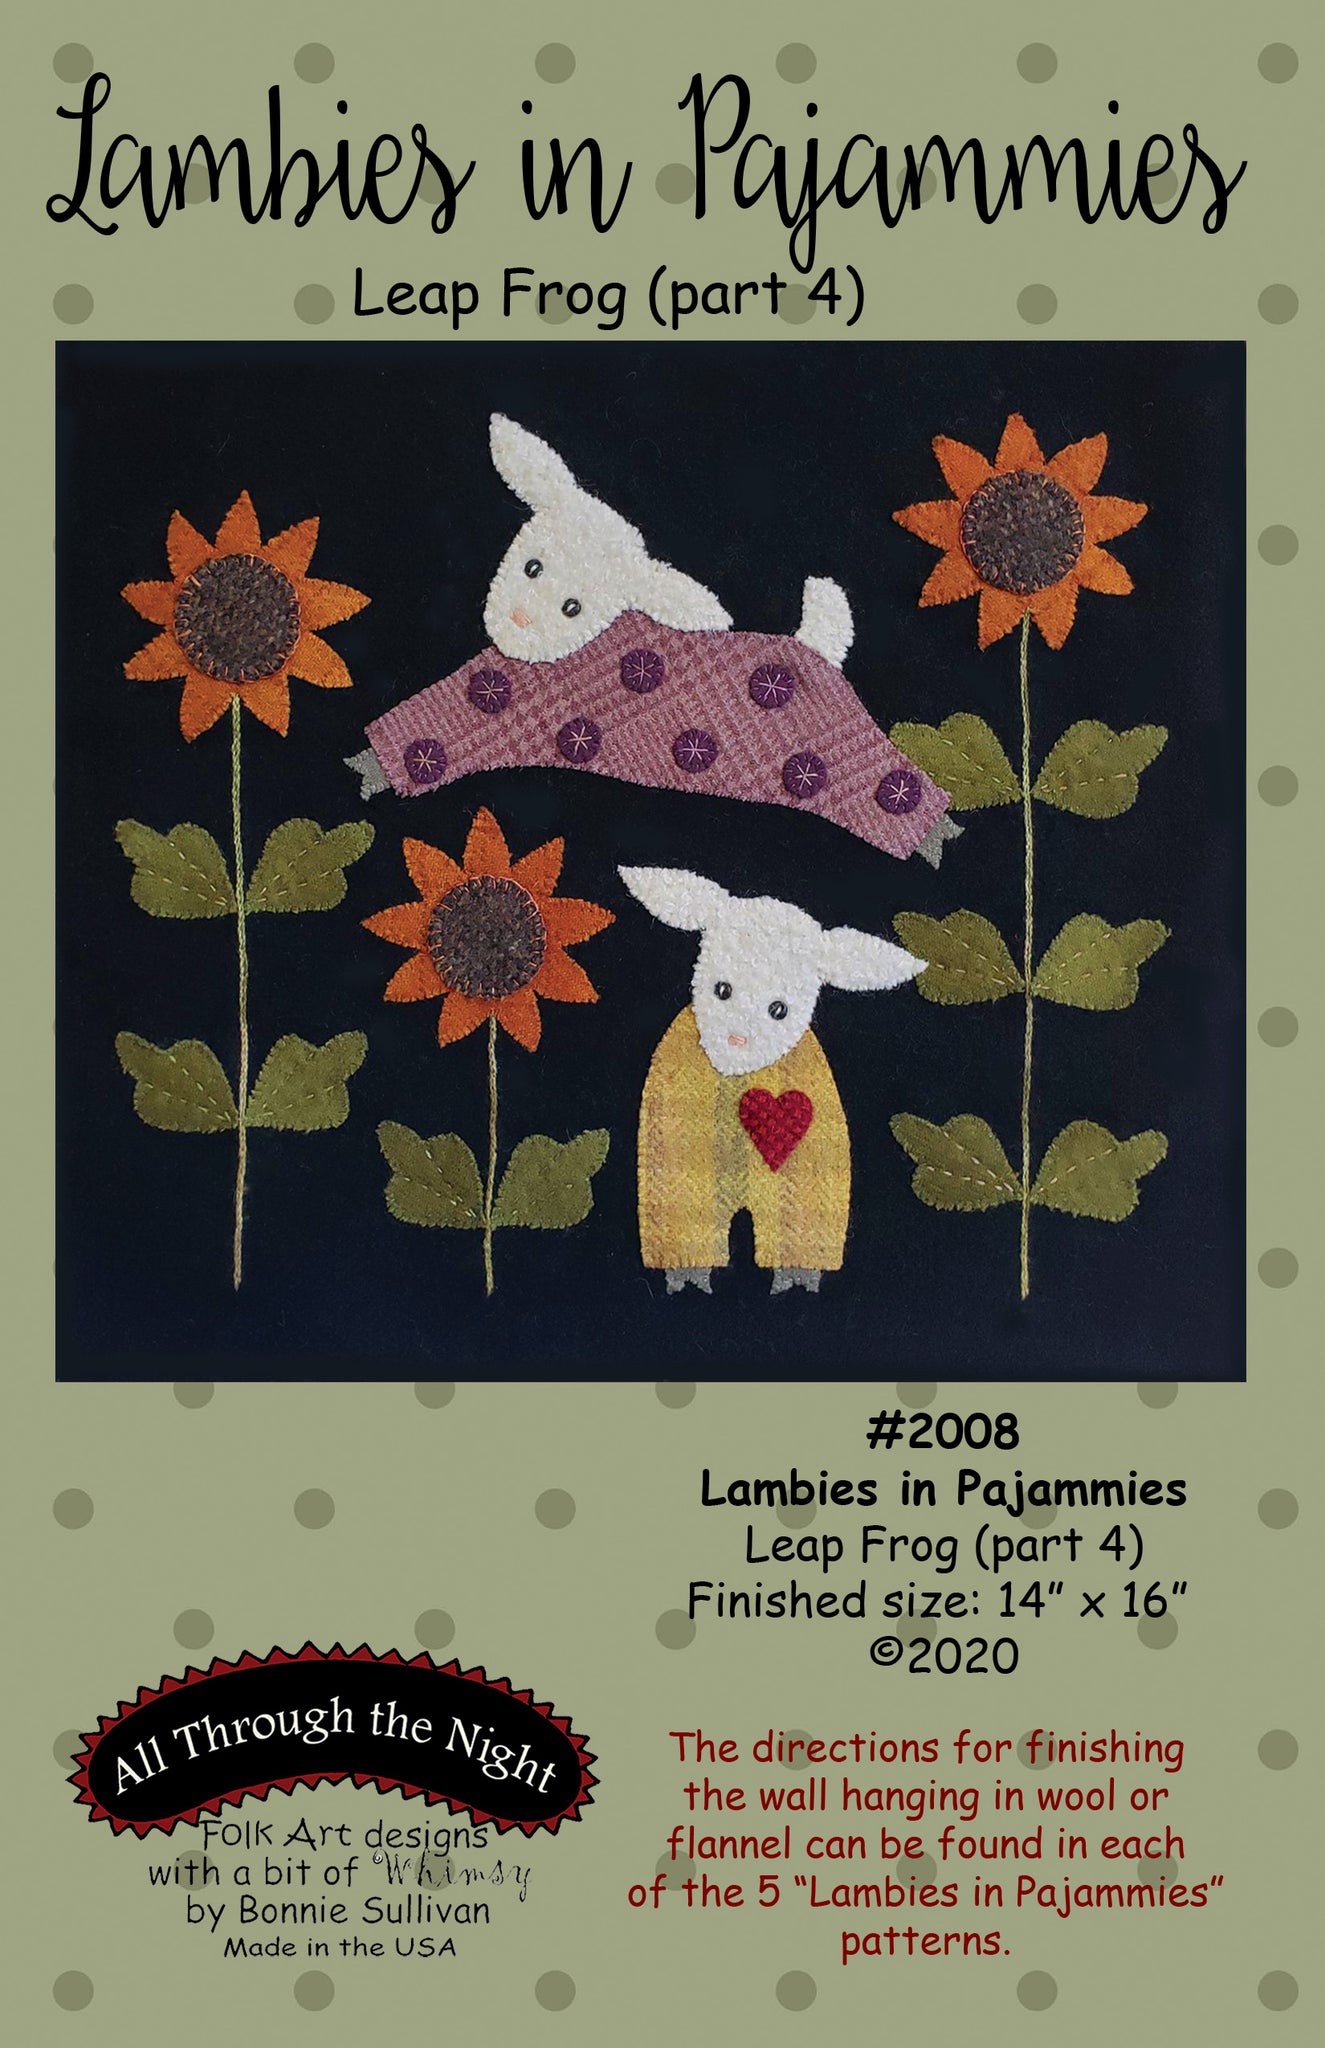 2008 - Lambies in Pajammies "Leap Frog" (part 4)